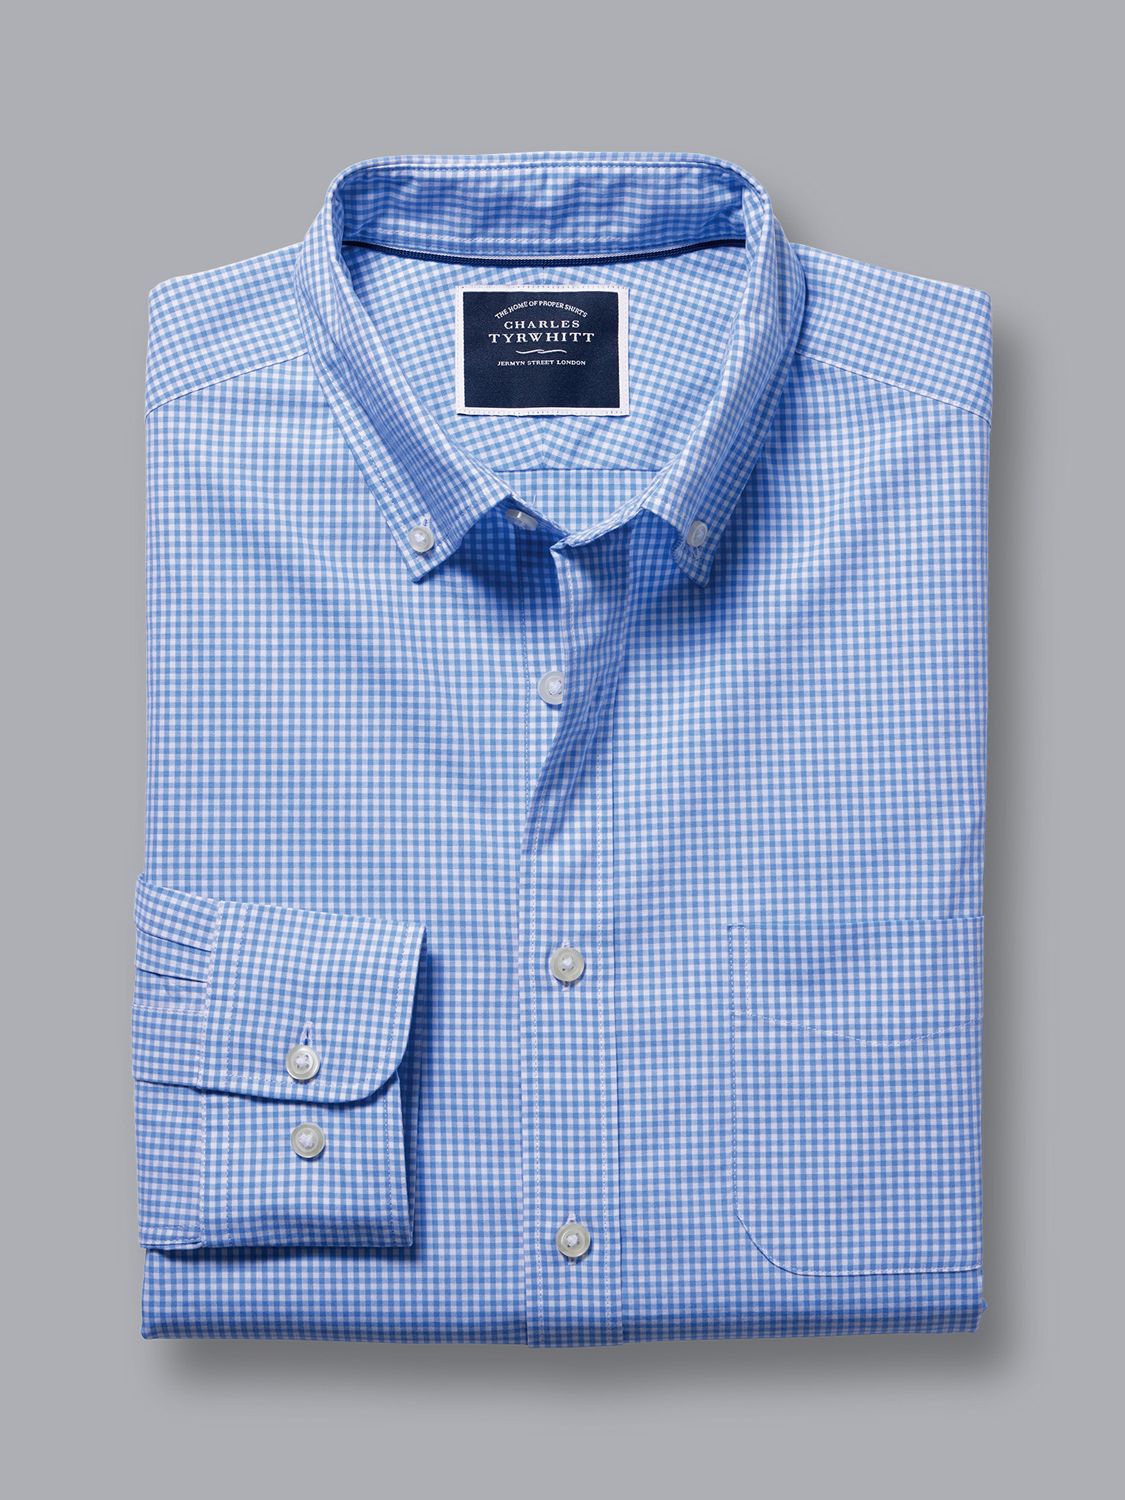 Buy Charles Tyrwhitt Non-Iron Stretch Poplin Gingham Check Cotton Shirt, Sky Blue/White Online at johnlewis.com